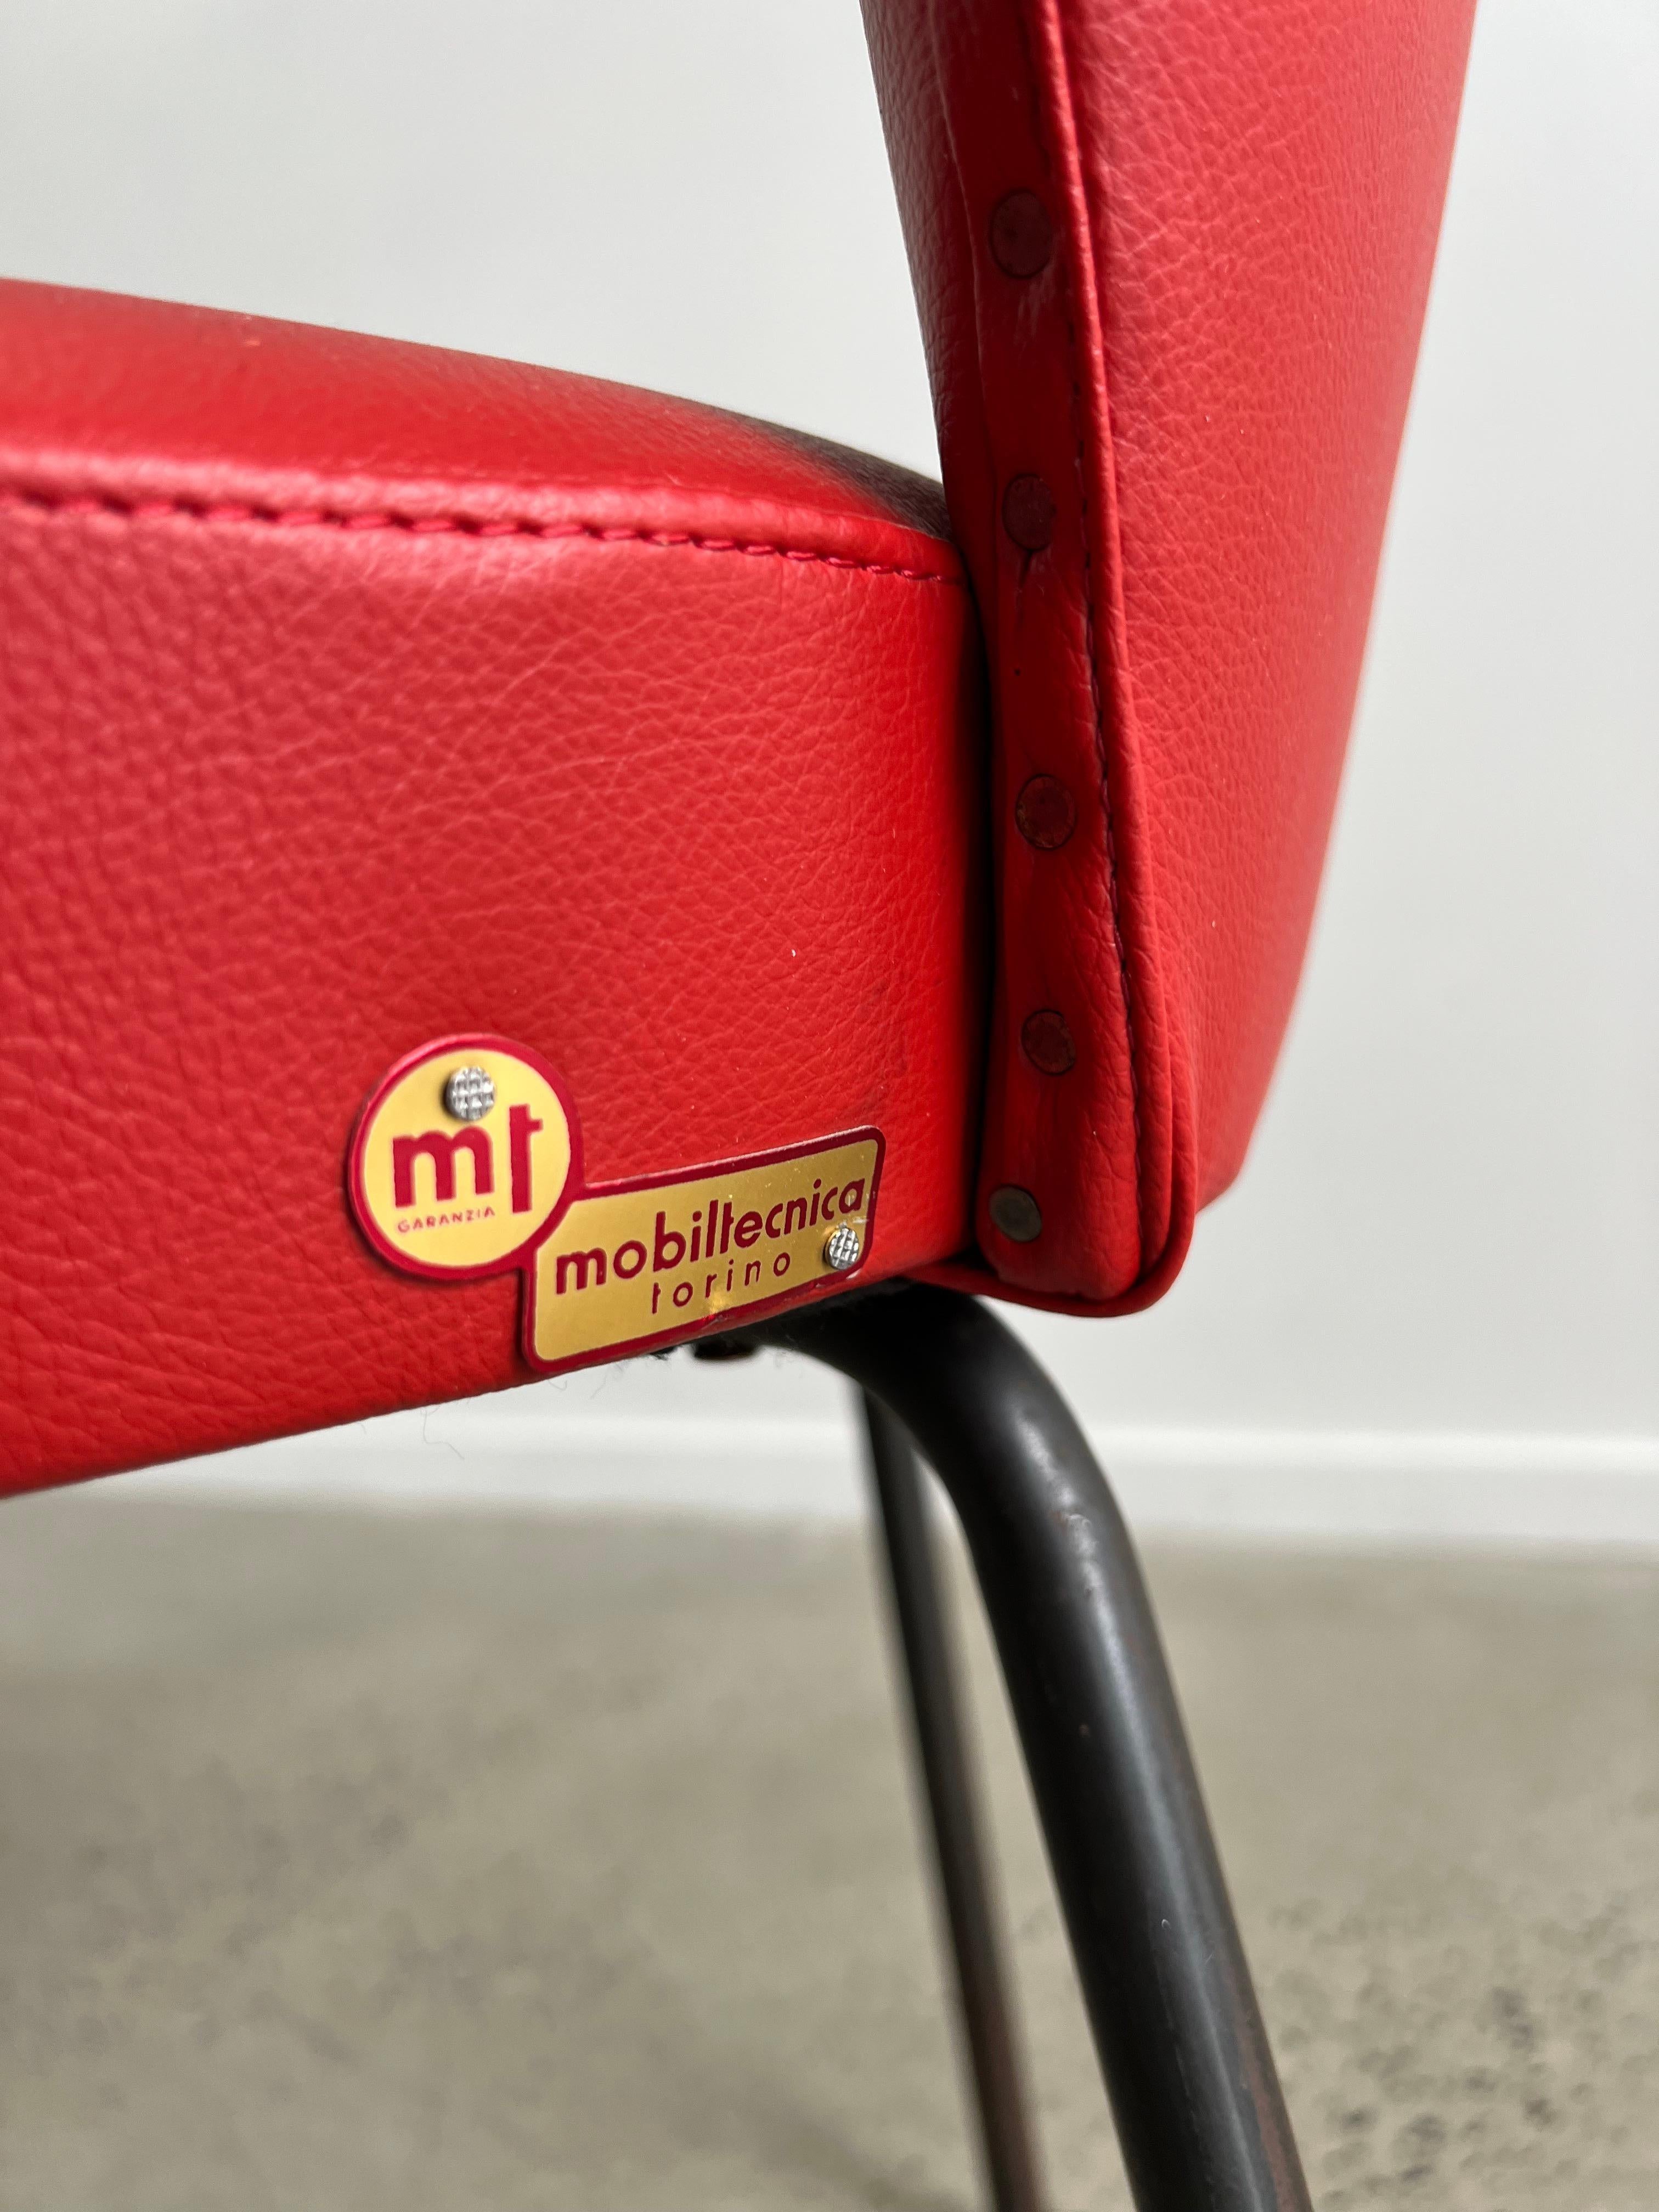 Mobiltecnica chaises italiennes en cuir Torino en vente 1